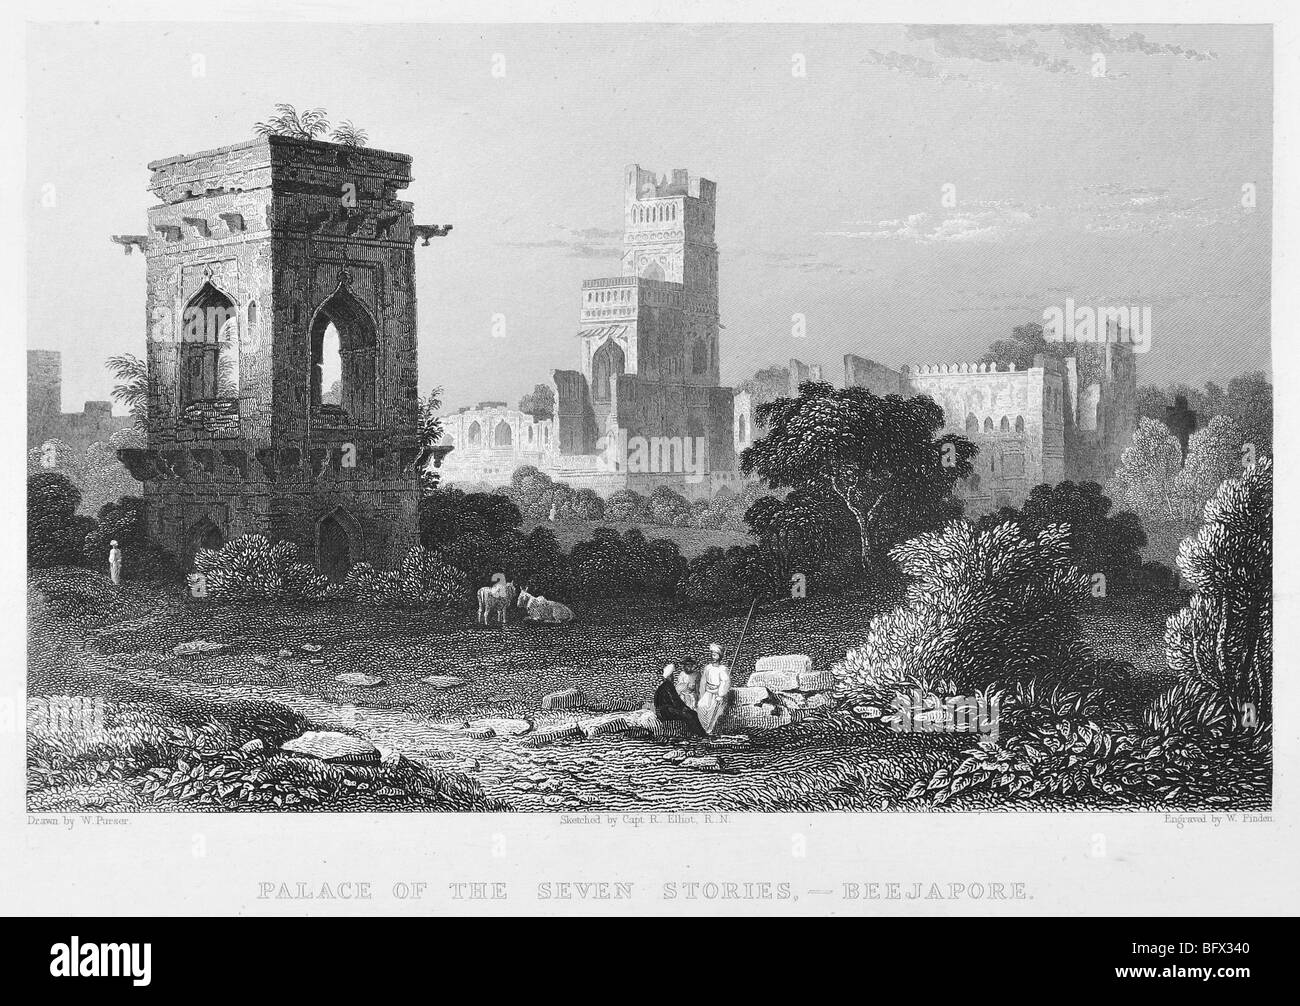 BRITISH INDIA Sat Manzili FINDEN 1858 Palace of the seven stories Bijapur 